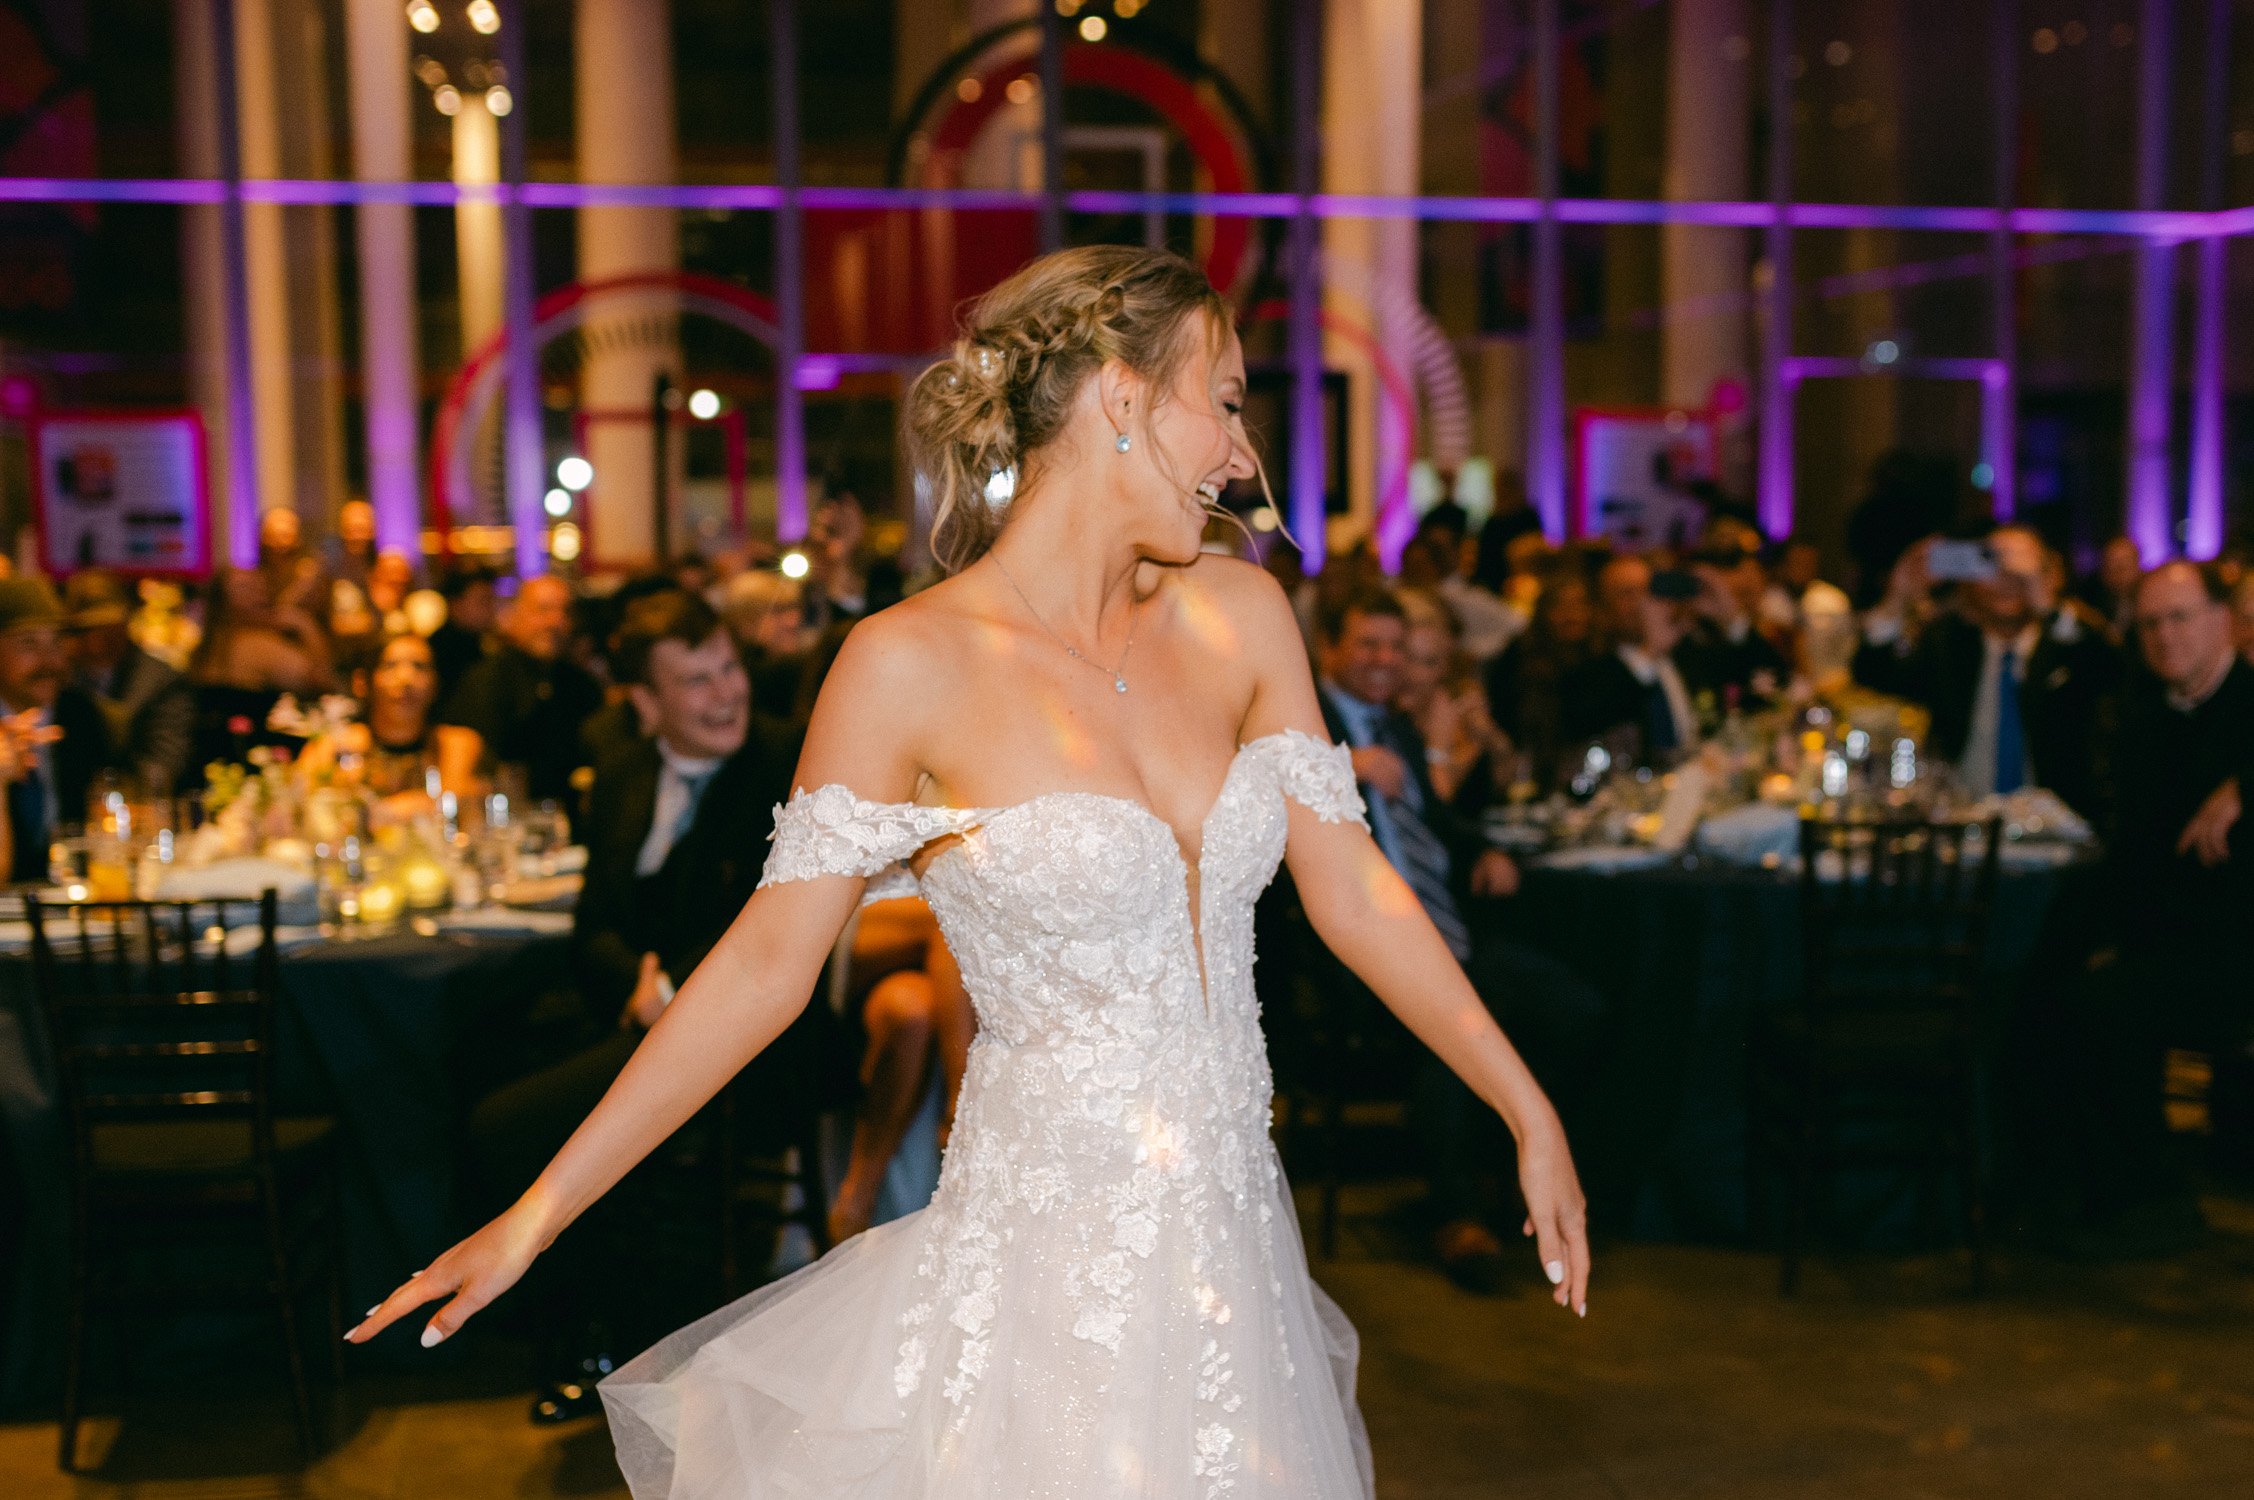 California academy of Sciences in San Francisco Wedding, photo of the bride dancing during their wedding reception entrance